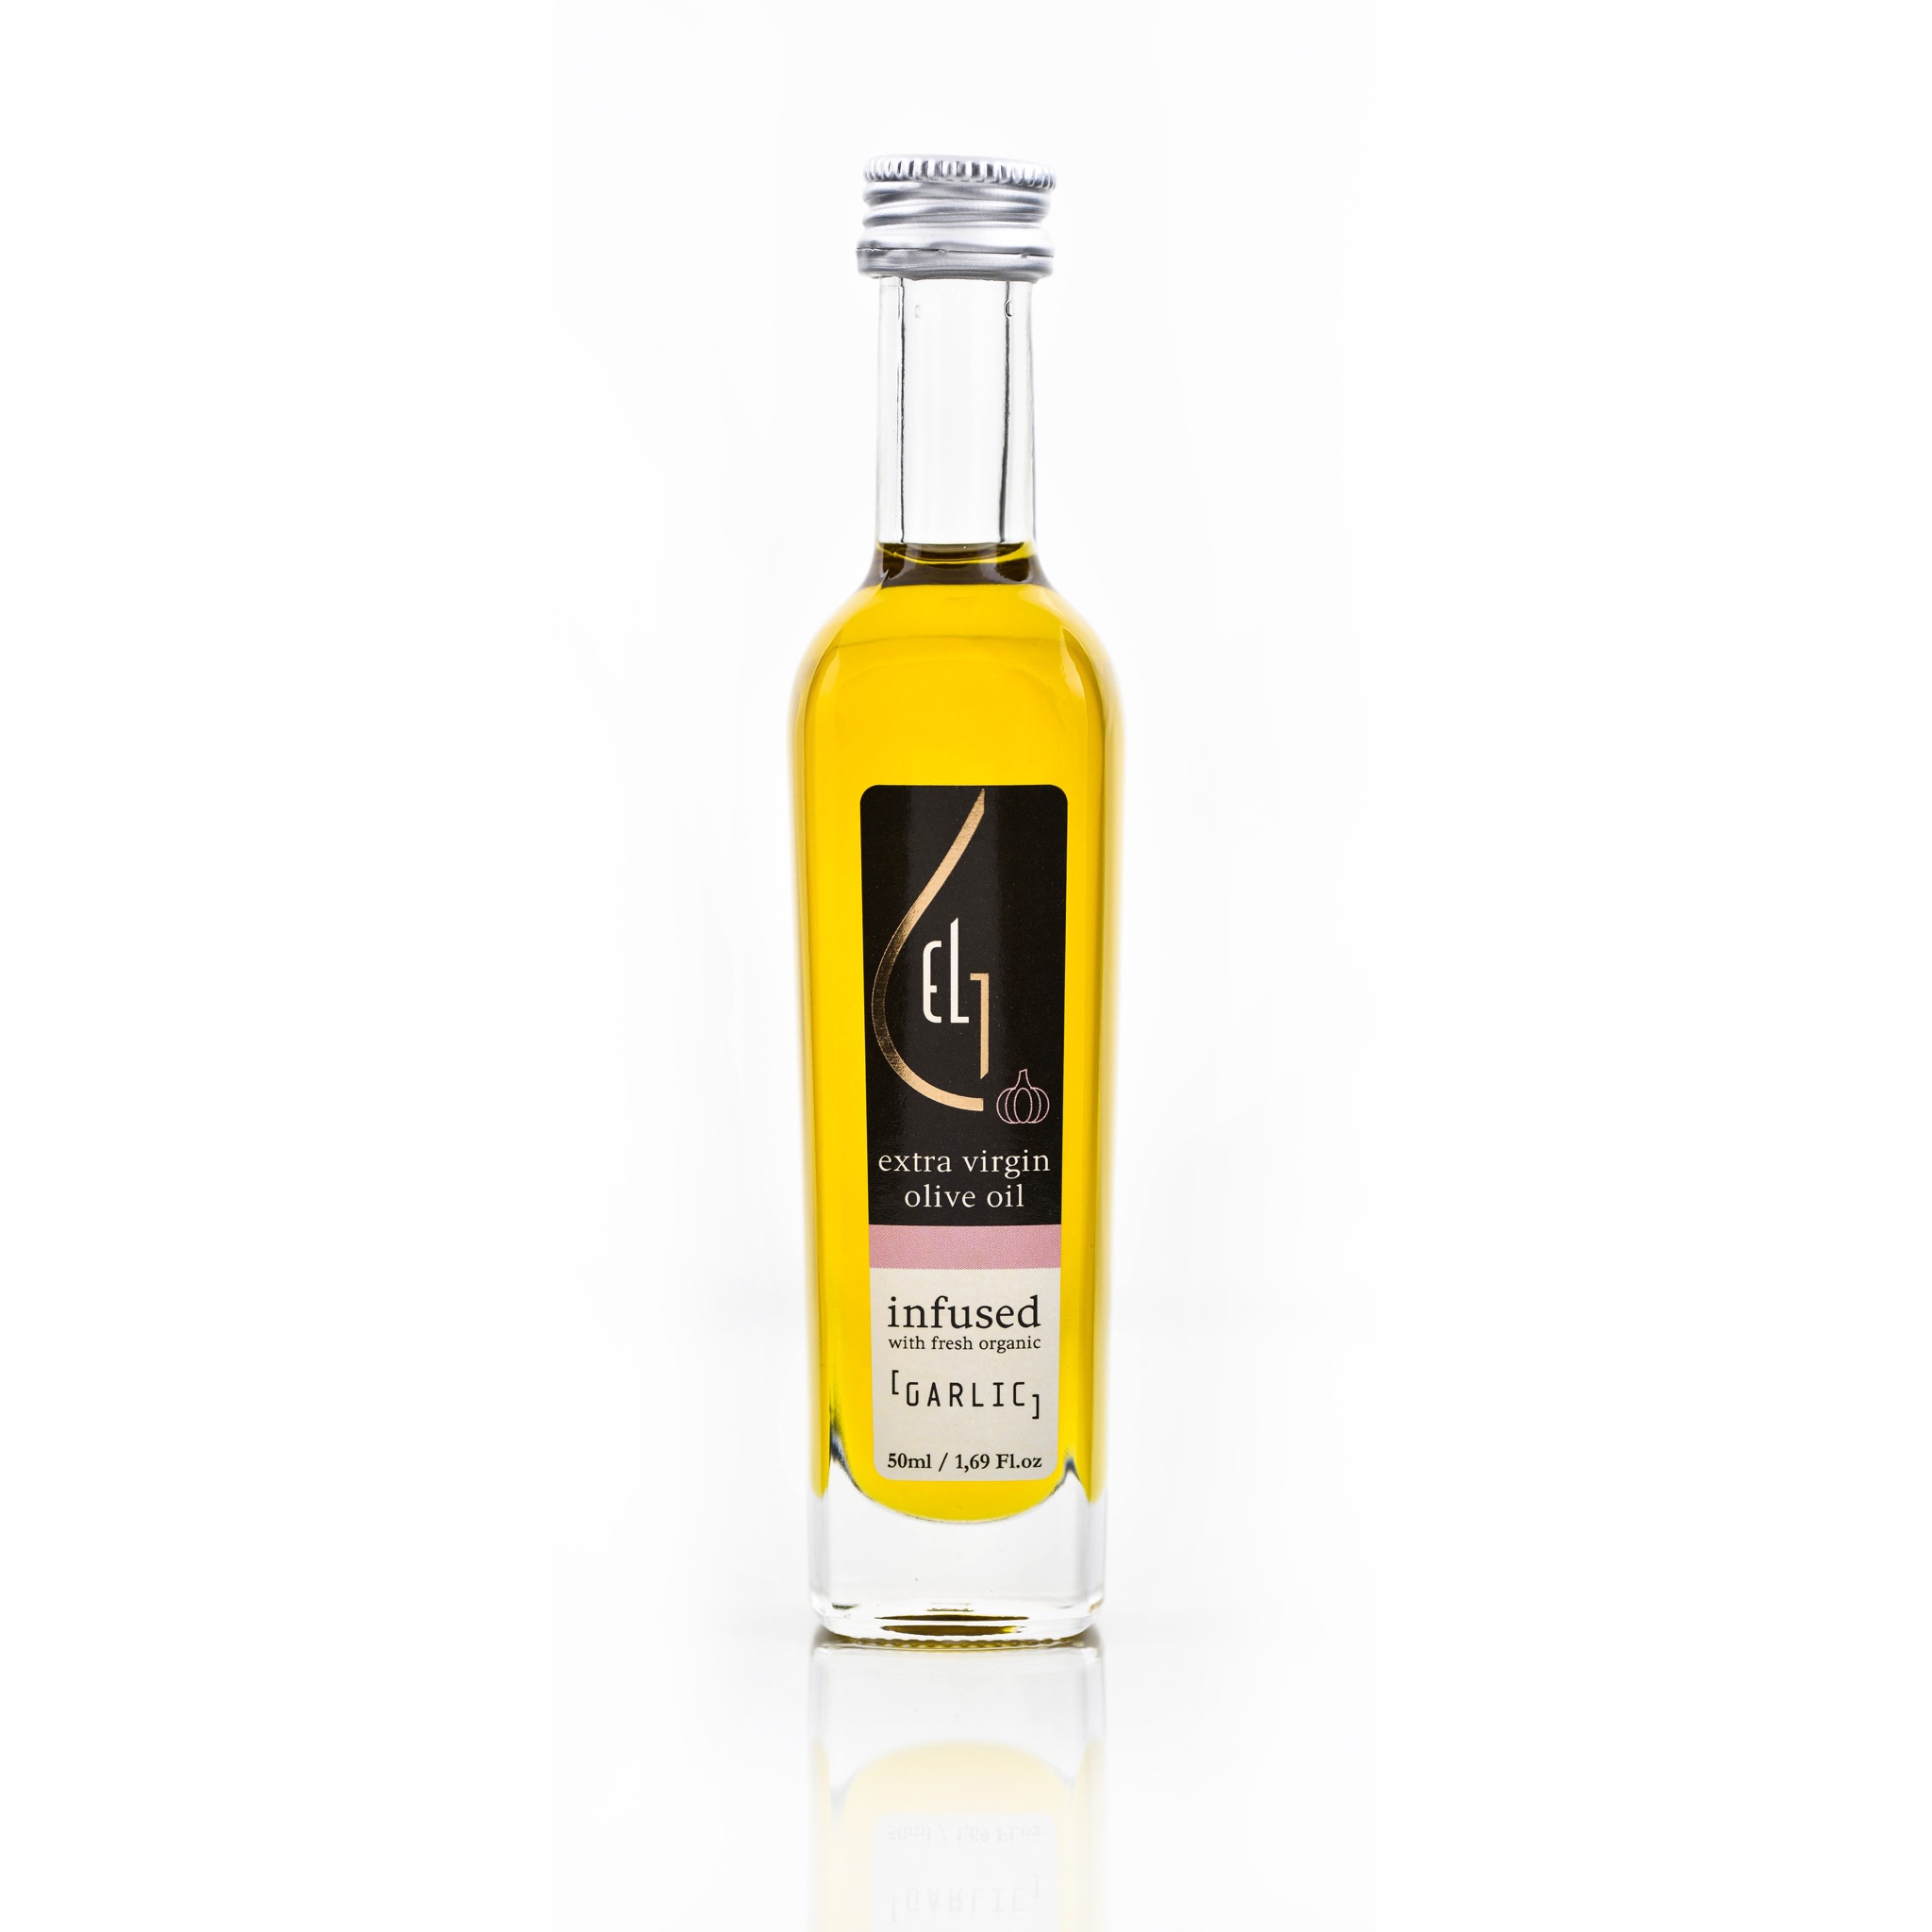 Pellas Nature Garlic infused Olive Oil 1.69 oz Bottle